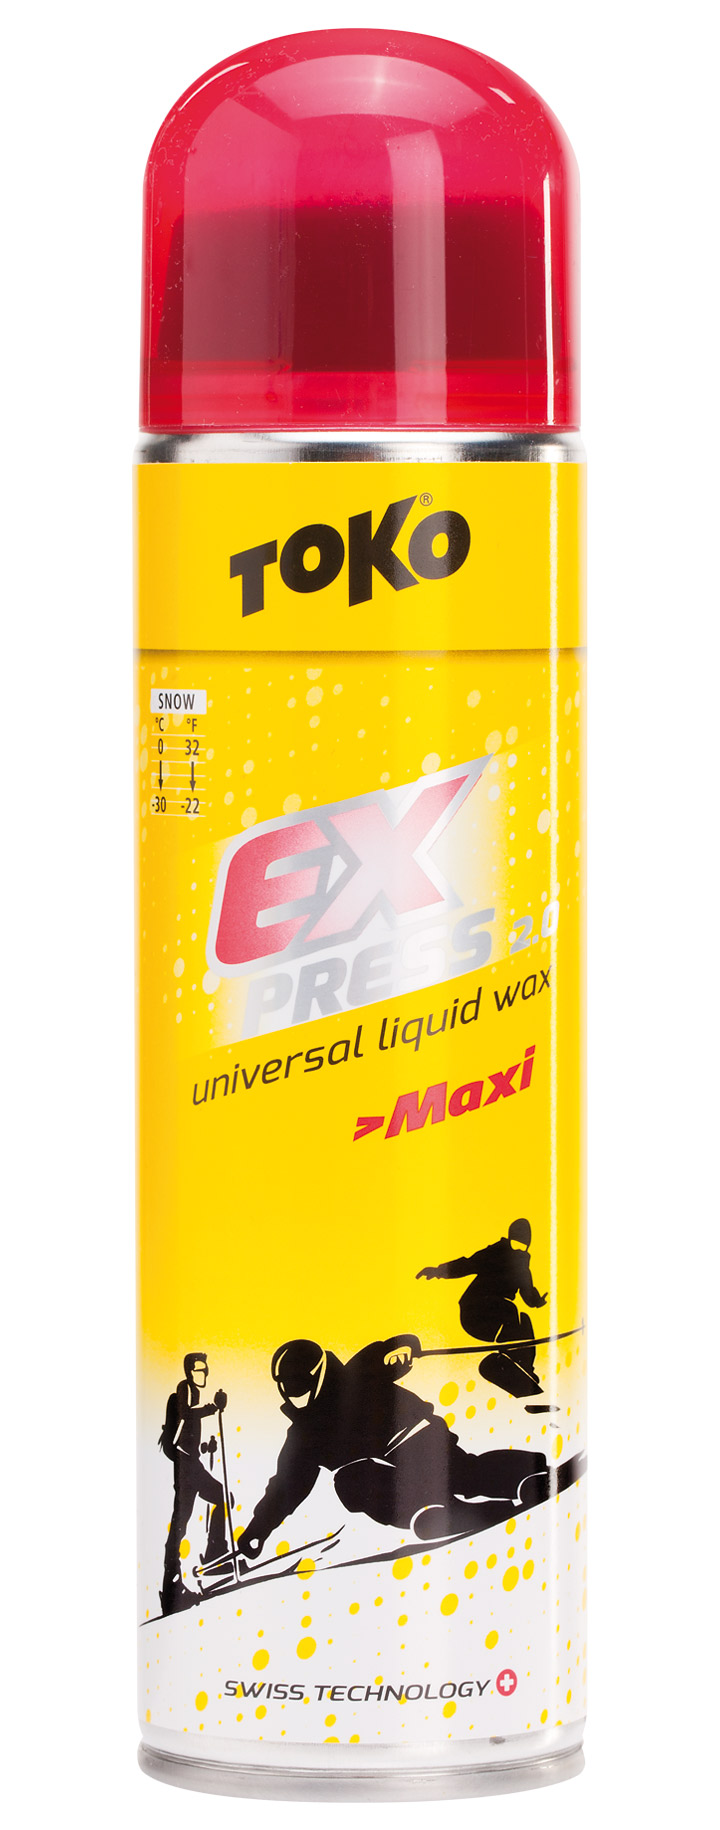 TOKO Express Maxi 200ml Universal-Flüssigwax (Grundpreis: 7,98 €/100ml)